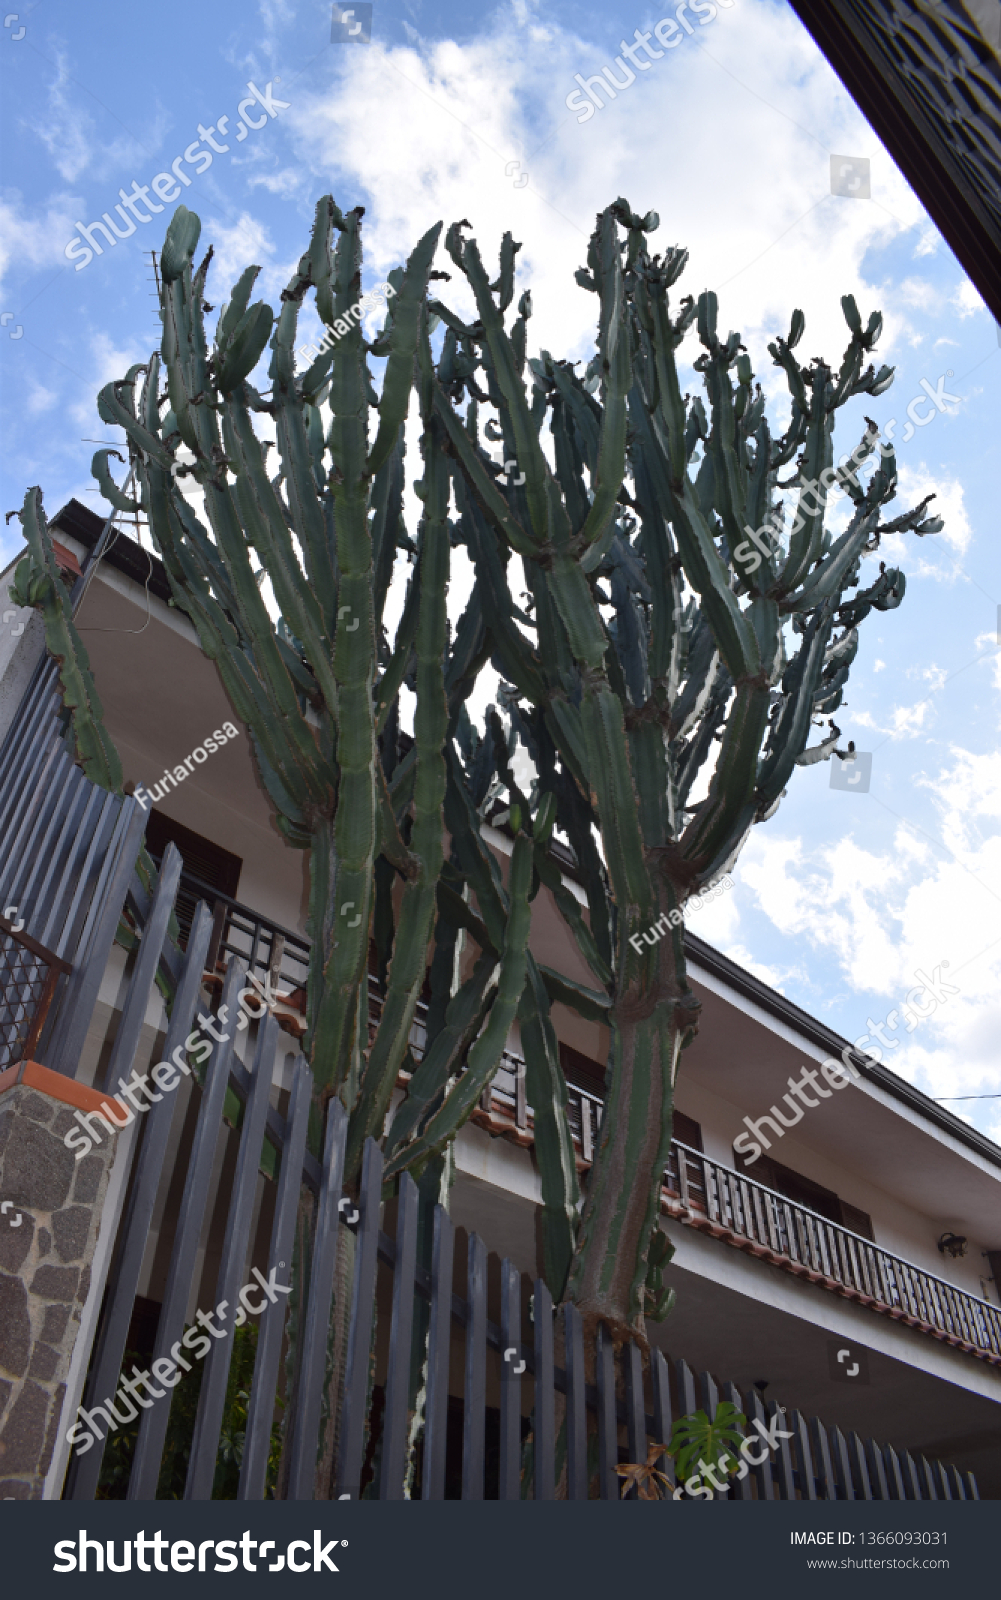 Tall euphorbia cactus plant #1366093031